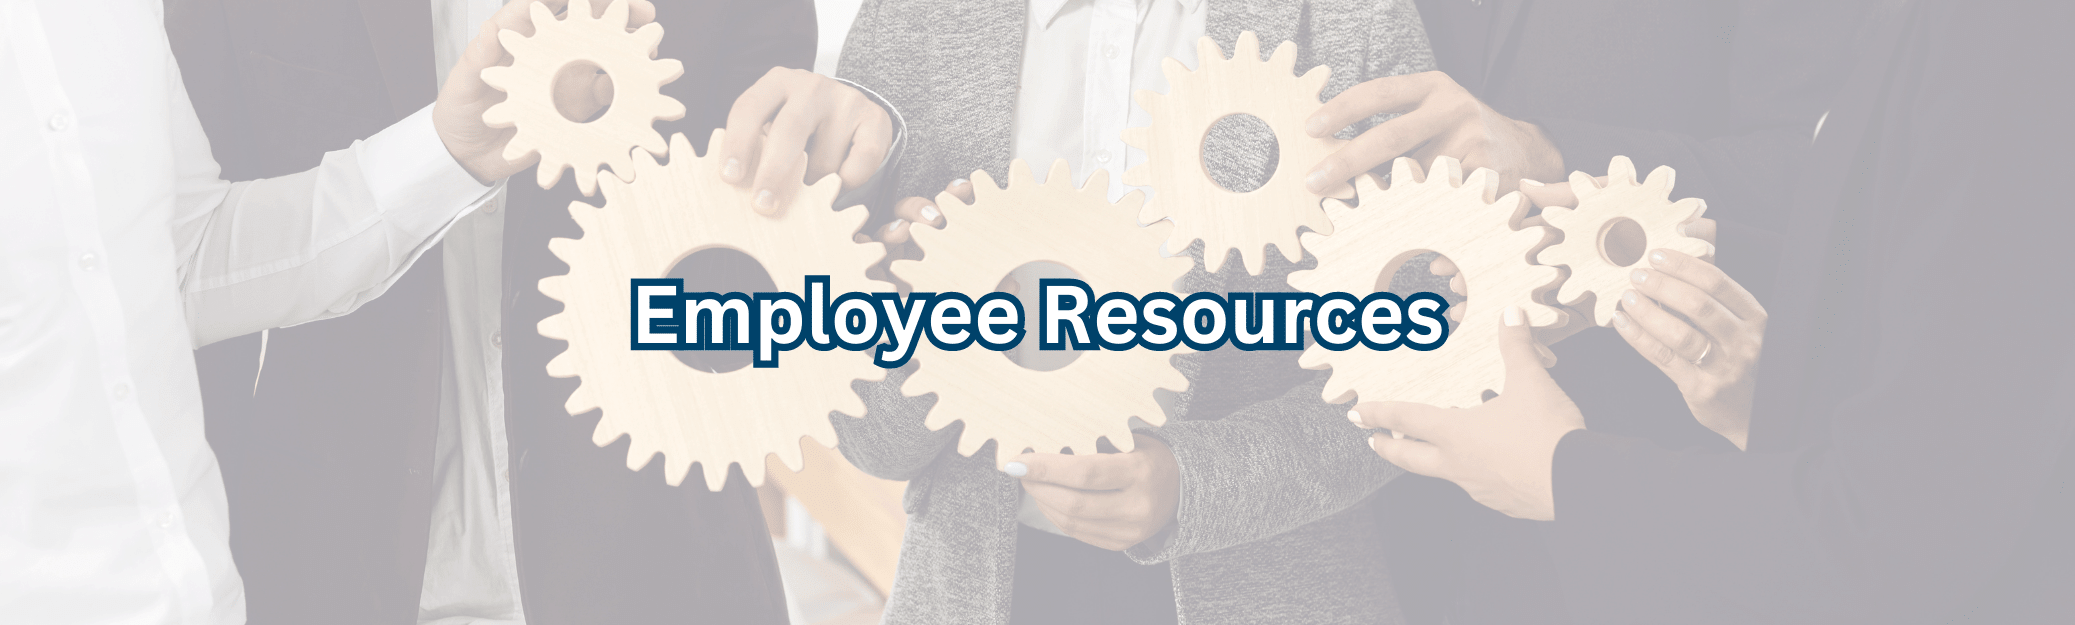 employee resources banner